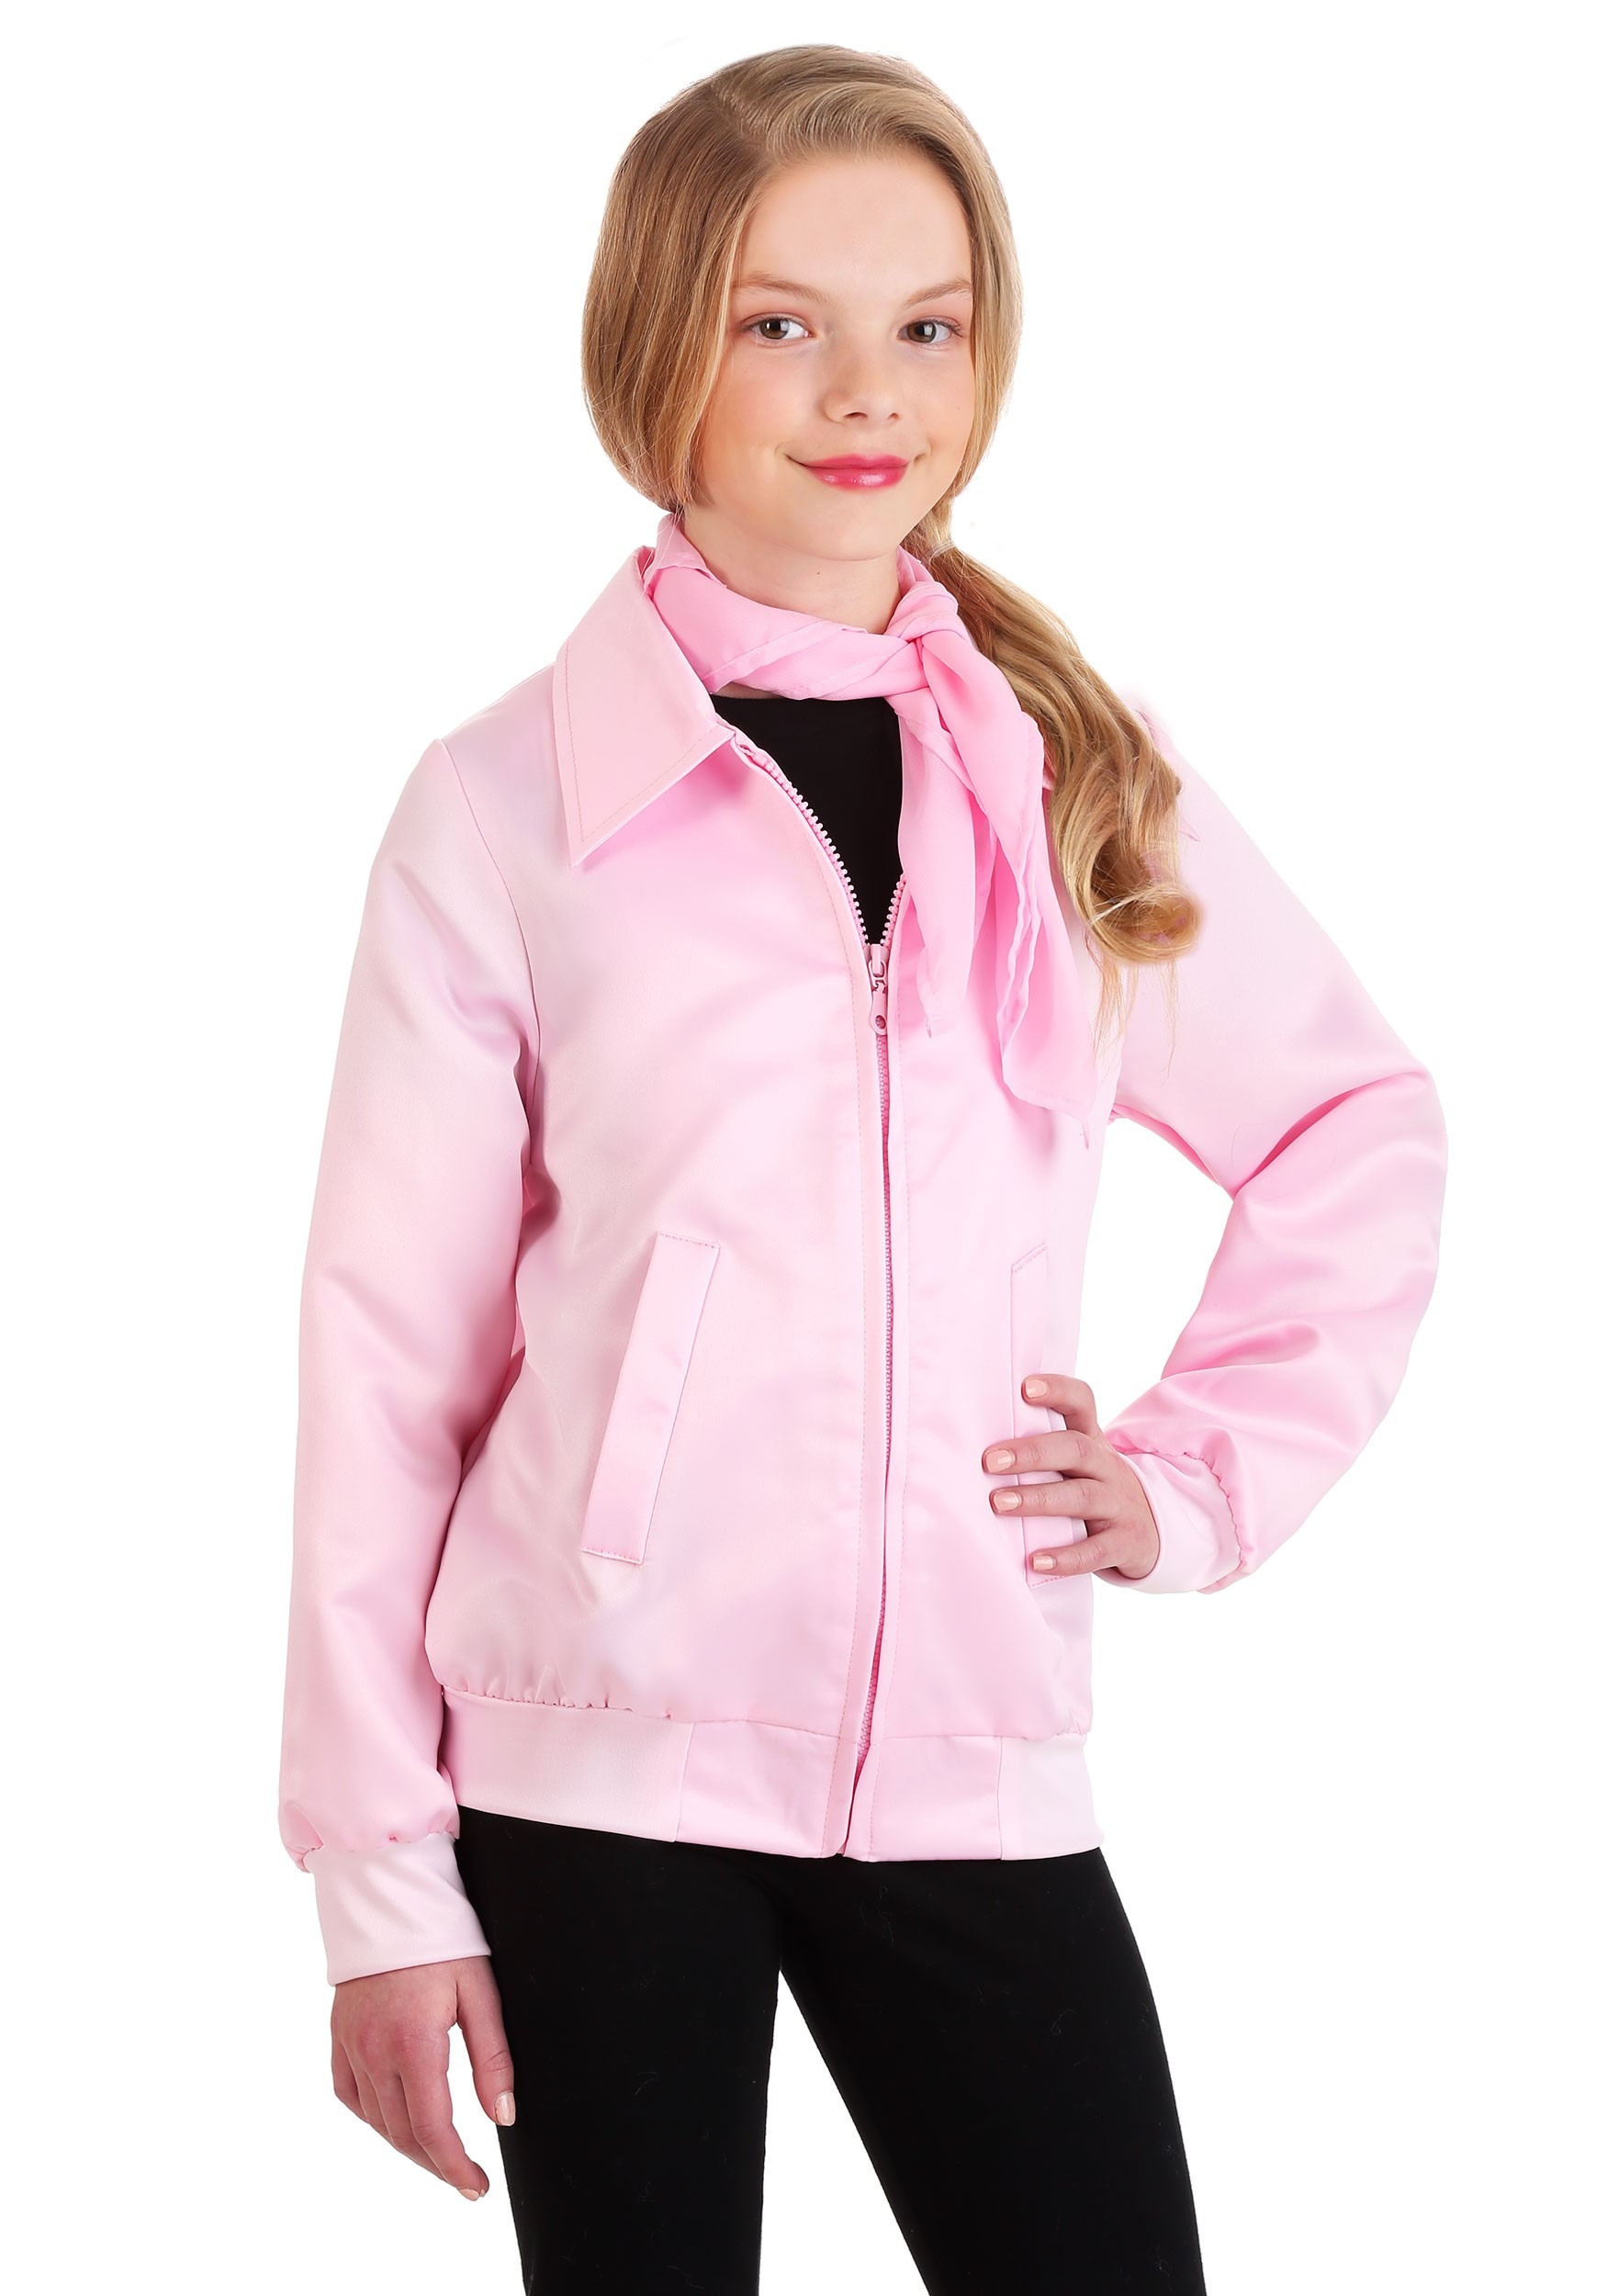 Girls Grease Pink Ladies Costume Jacket